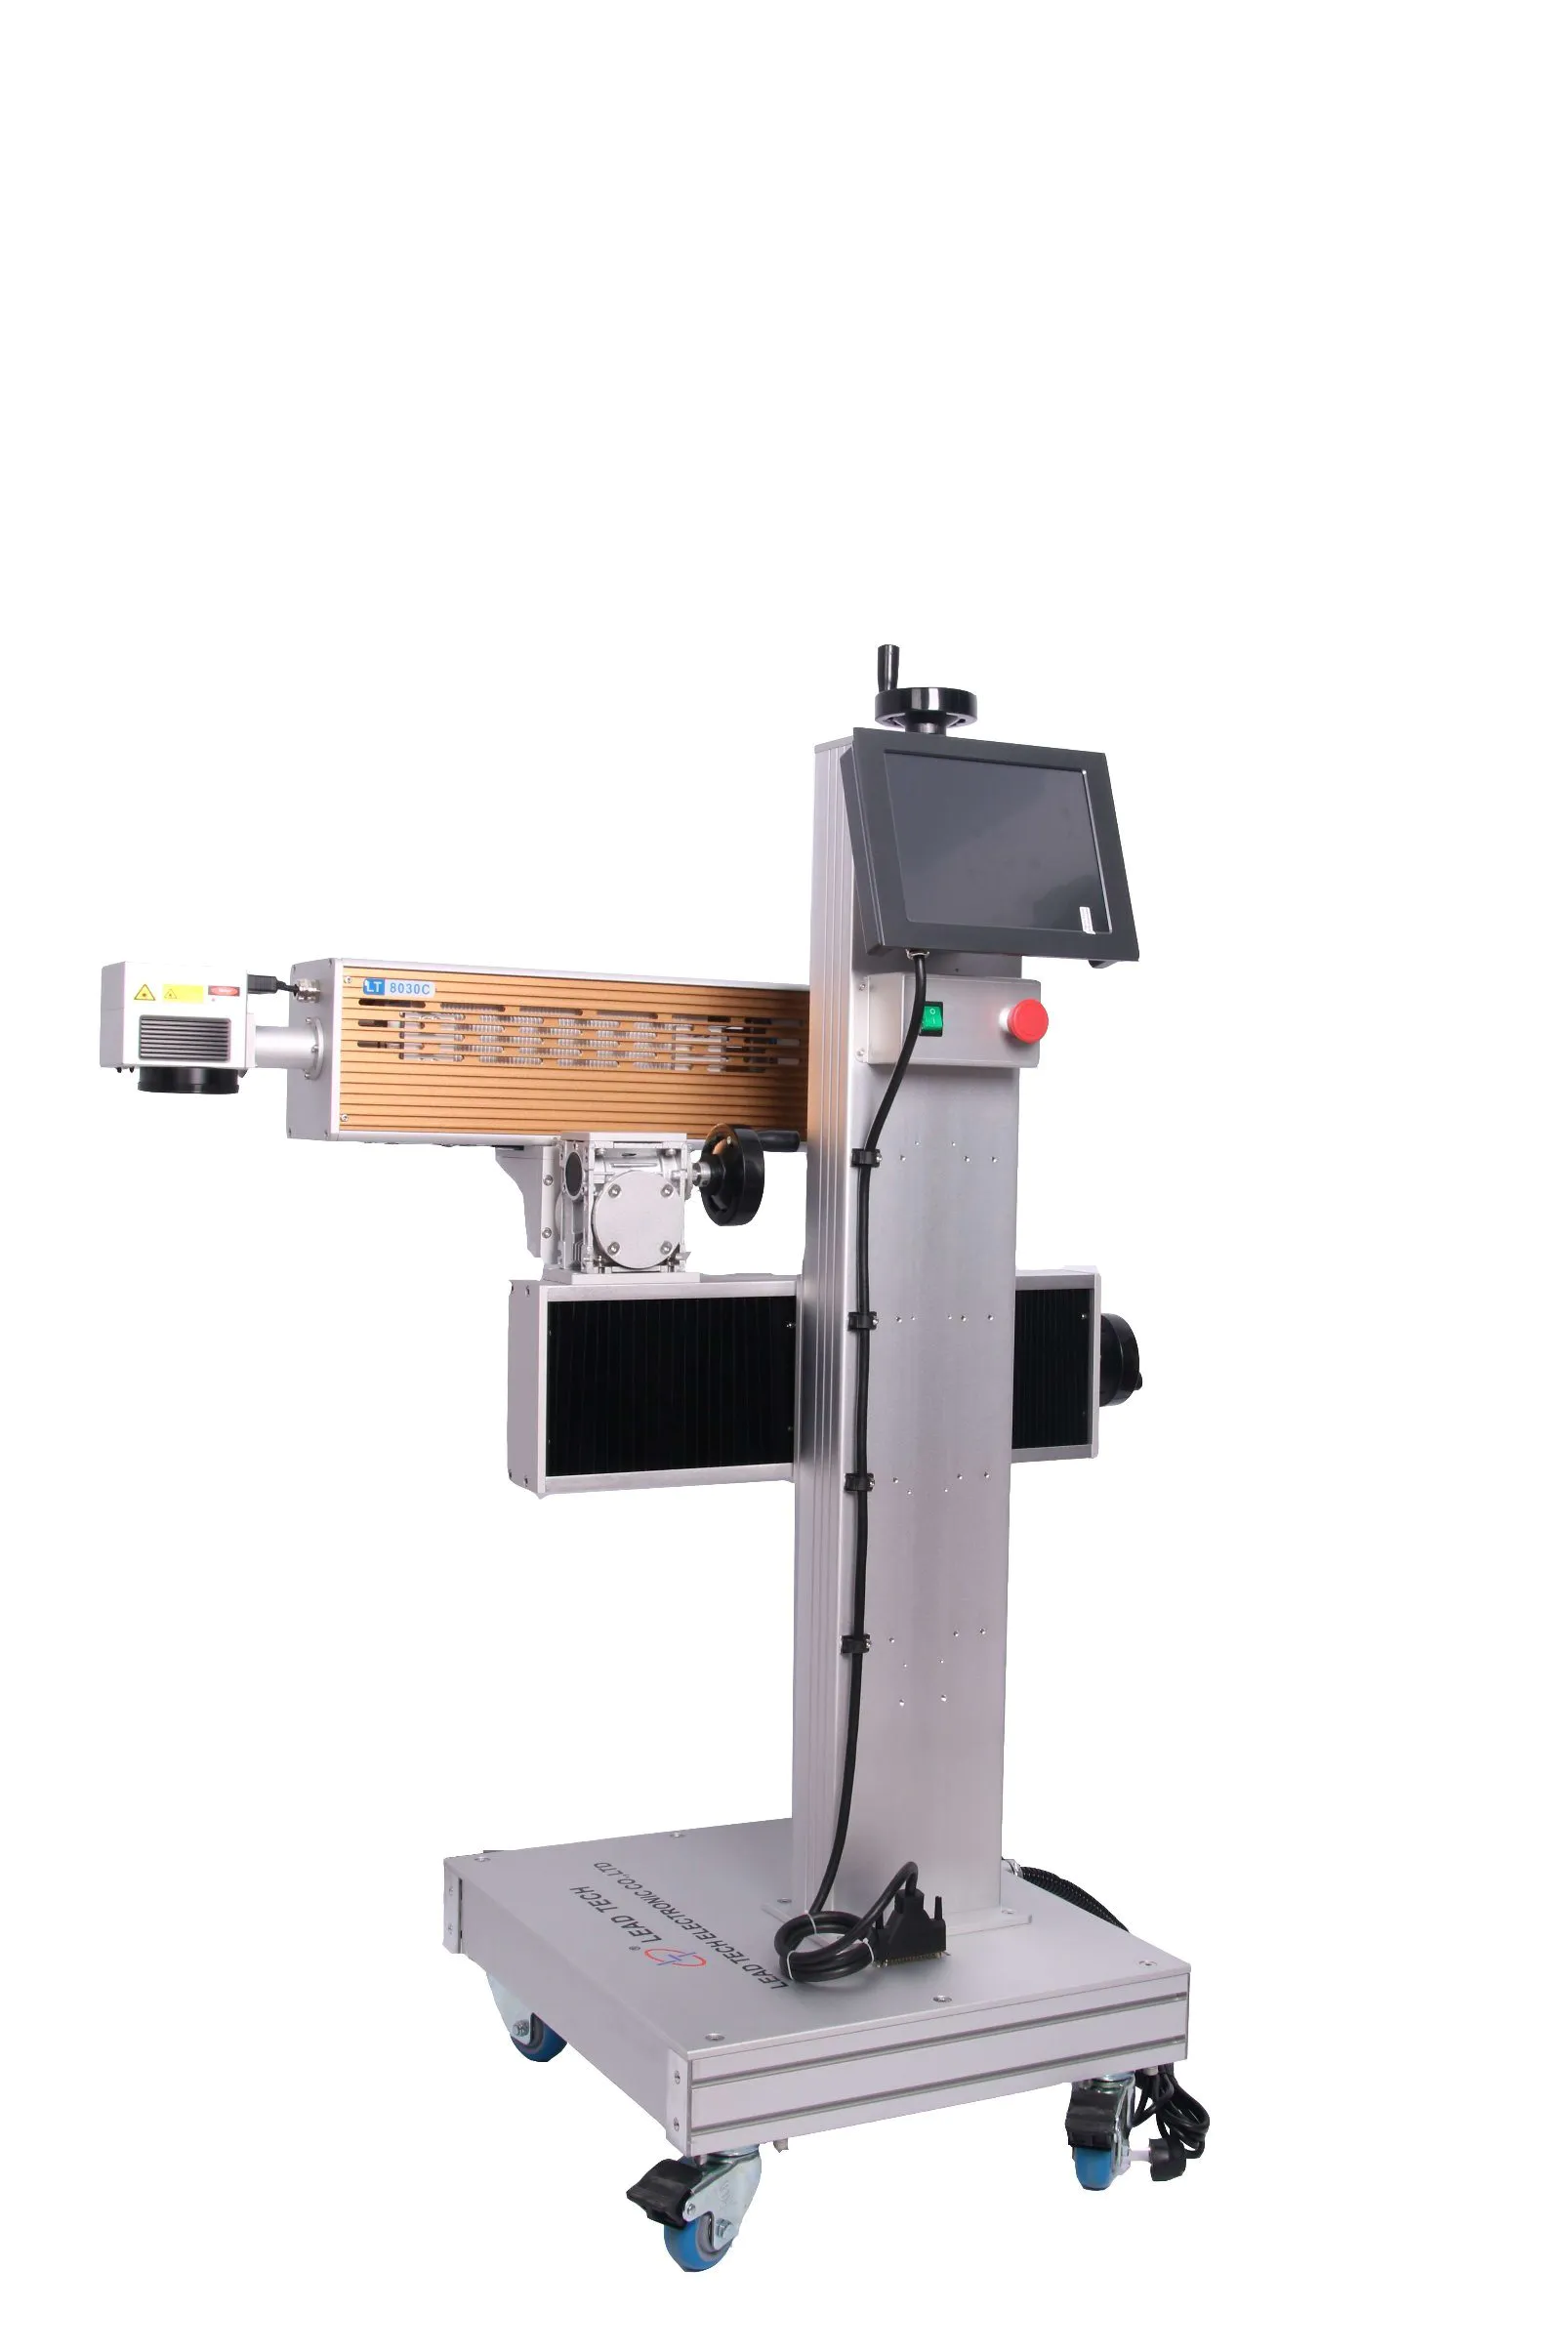 Lead Tech Lt8020c/Lt8030c CO2 20W/30W High Precision Digital Bottles Laser Printer